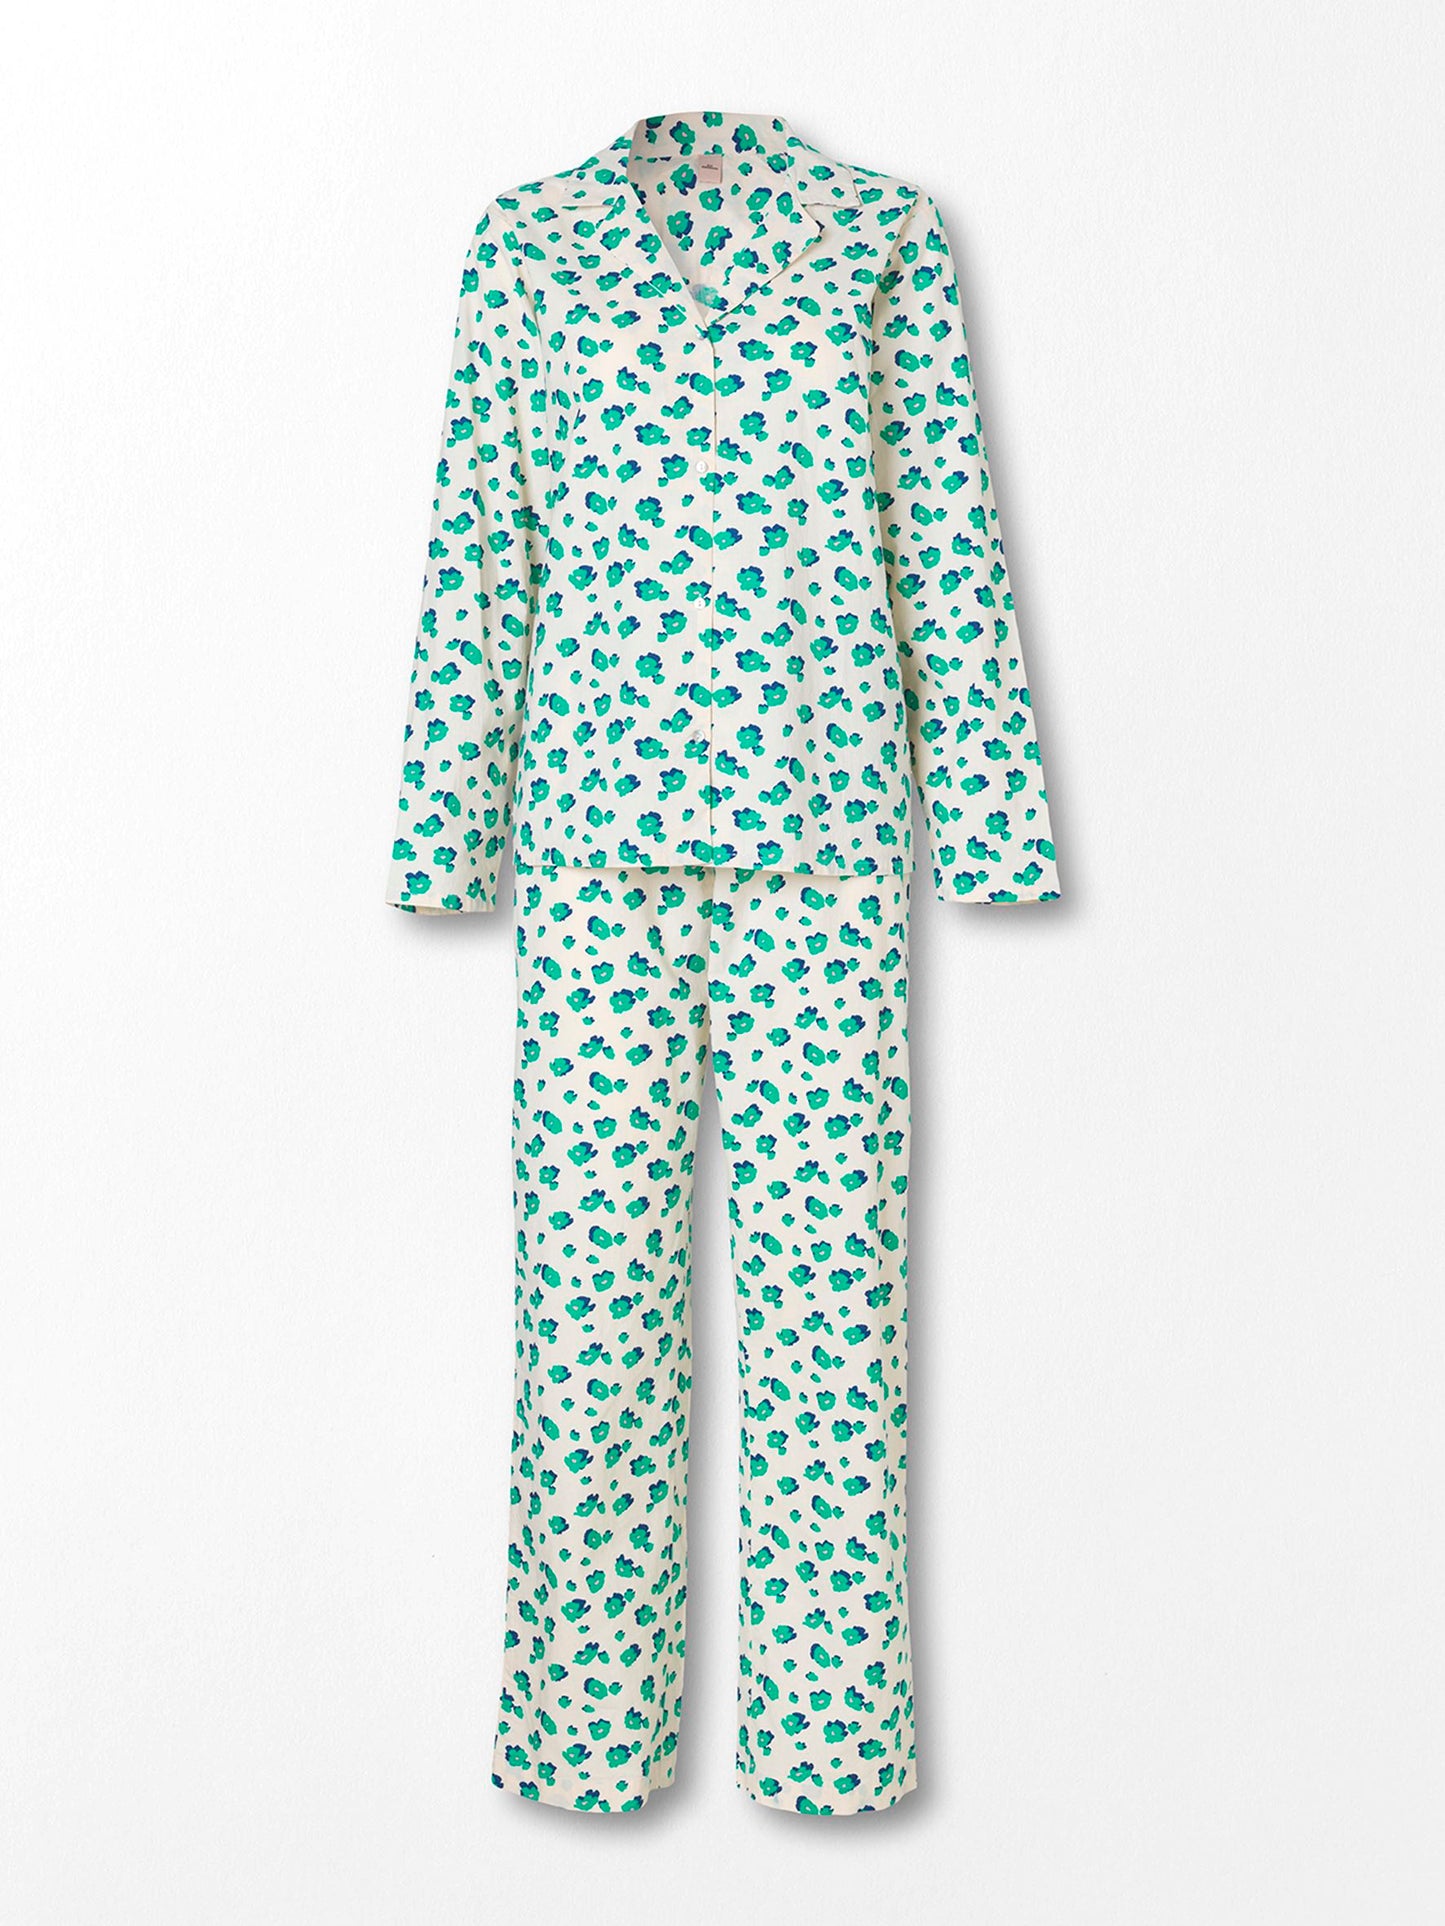 Becksöndergaard, Amapoly Pyjamas Set - Violet/Eventide, archive, sale, sale, sale, archive